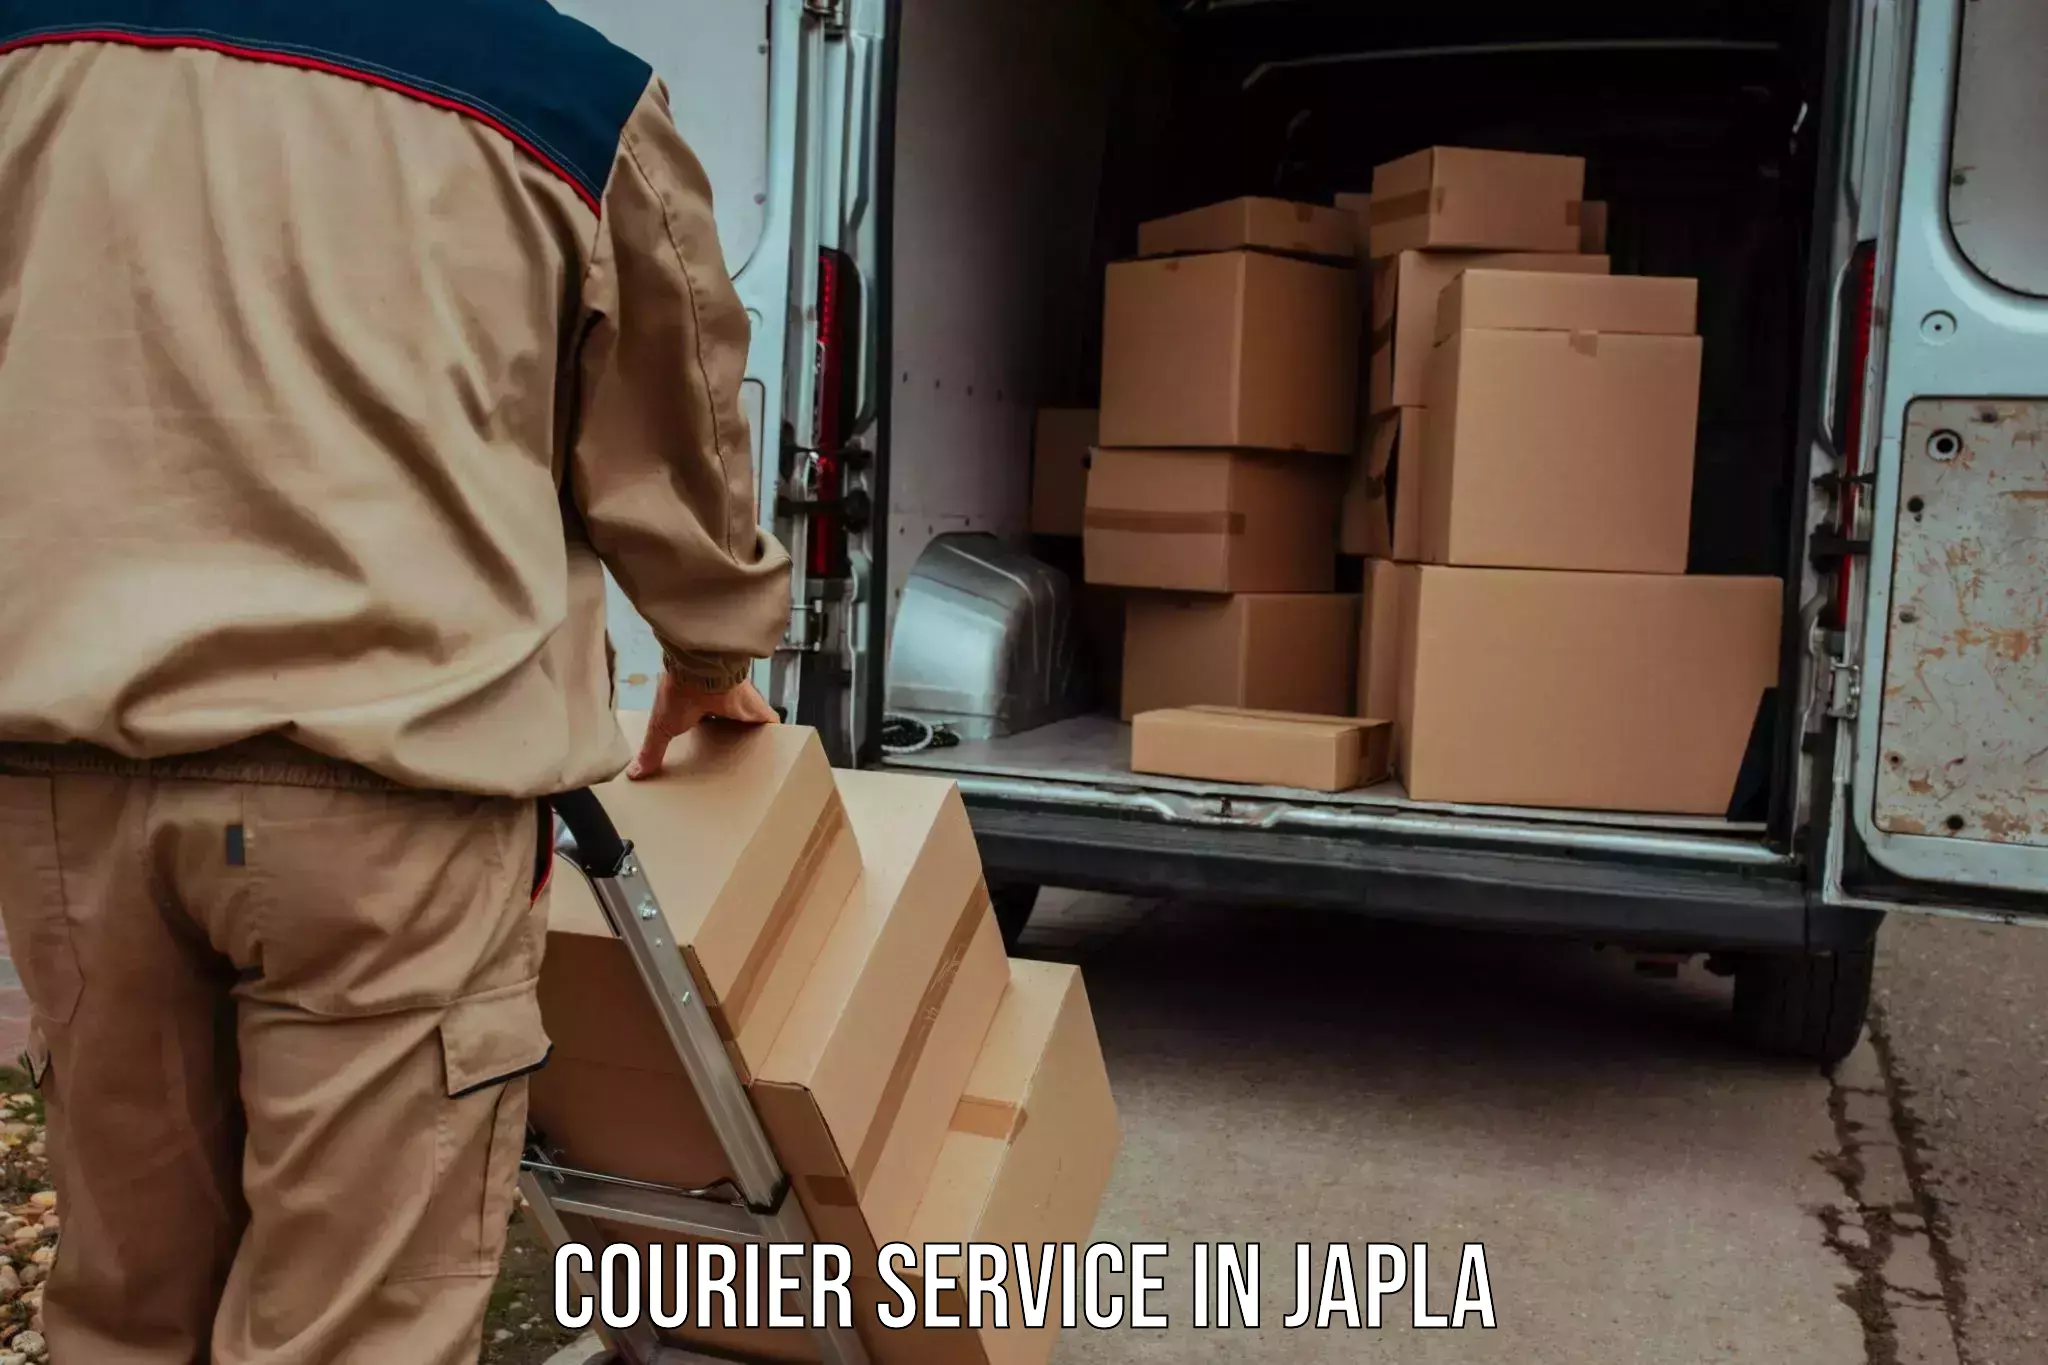 Courier service comparison in Japla